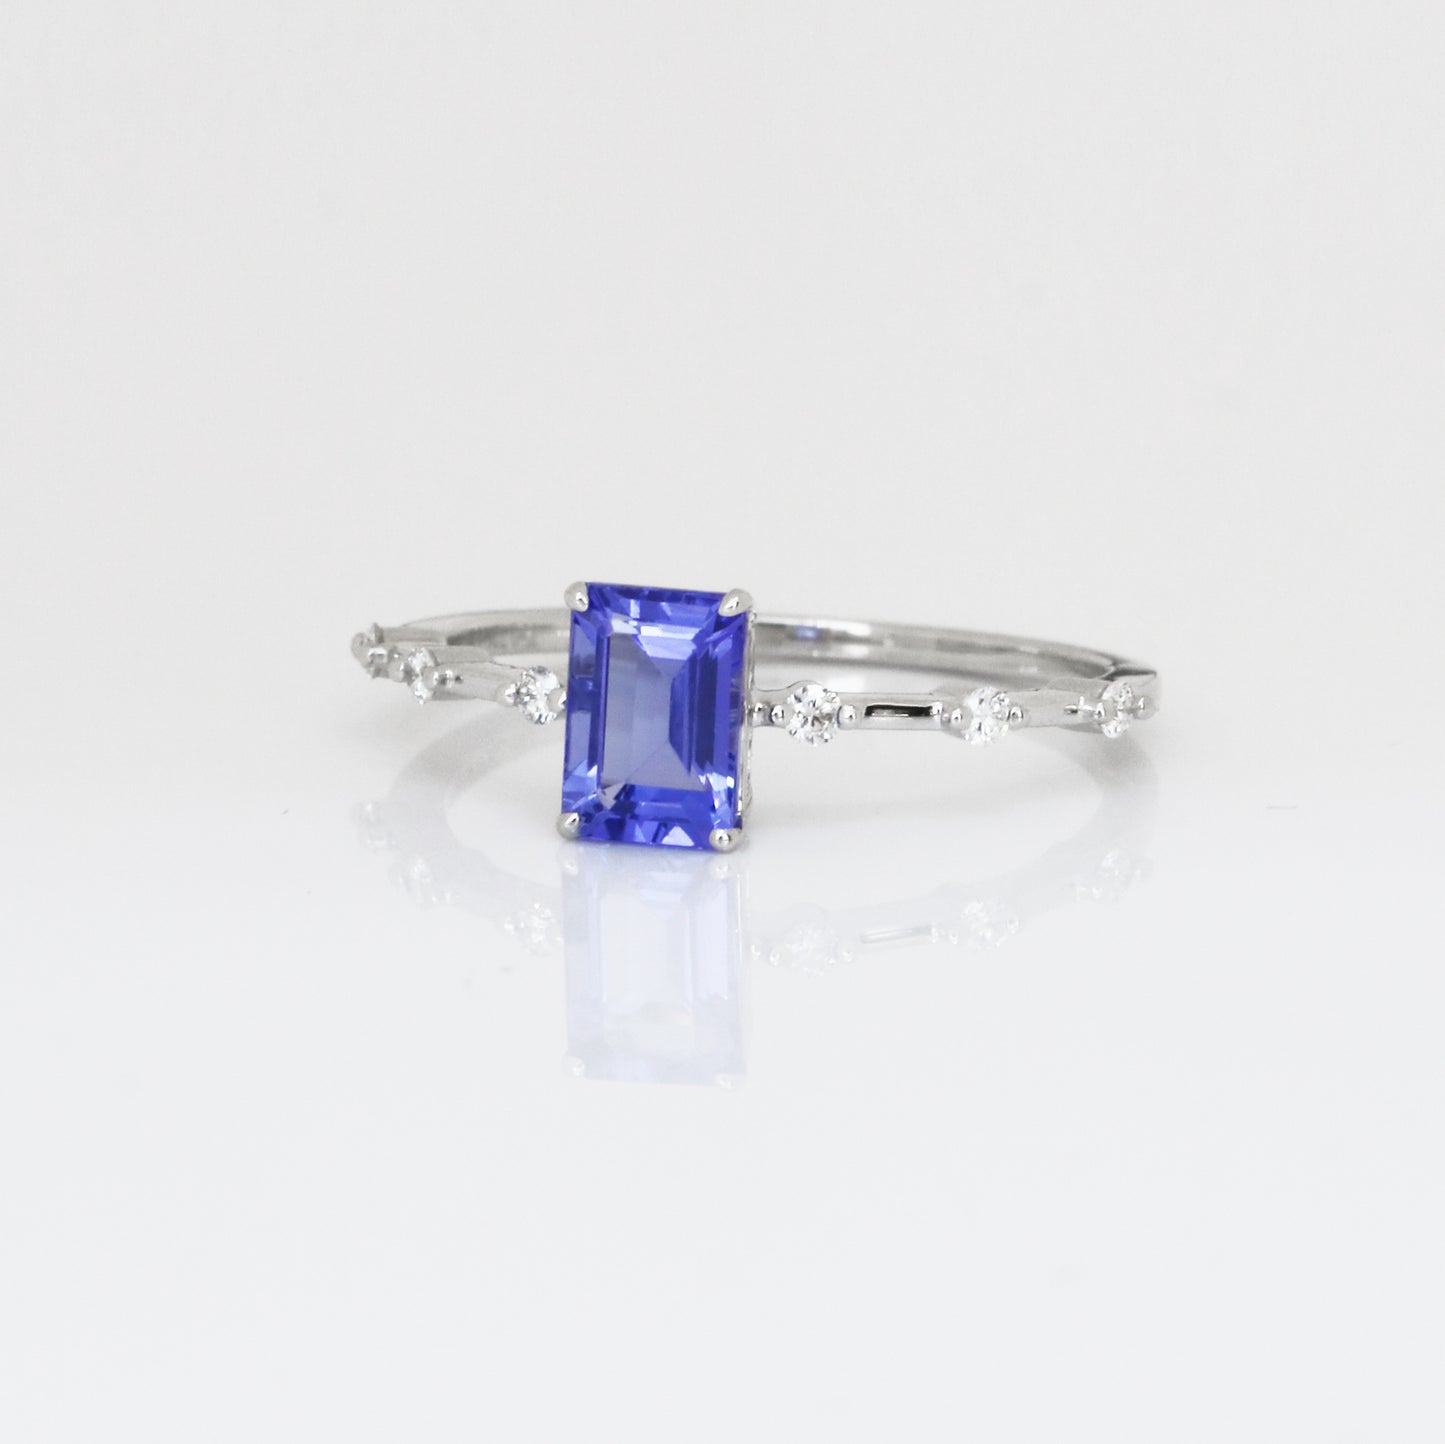 18k白金祖母綠切割坦桑石鑽石戒指側面 18k White Gold Emerald-cut Tanzanite Diamond Ring on side view